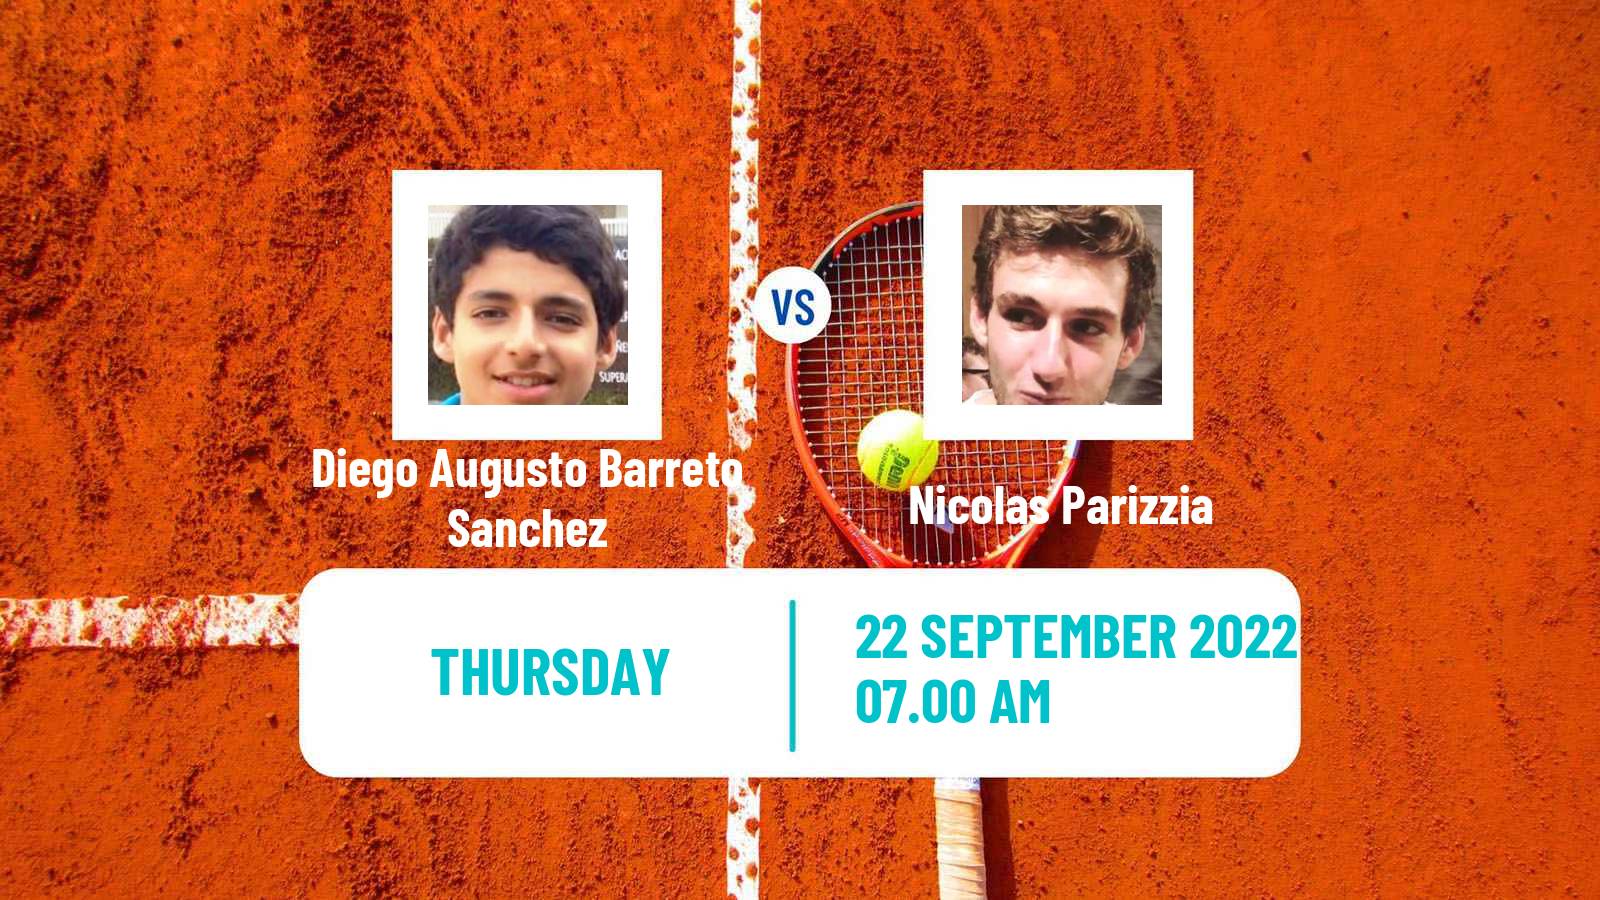 Tennis ITF Tournaments Diego Augusto Barreto Sanchez - Nicolas Parizzia